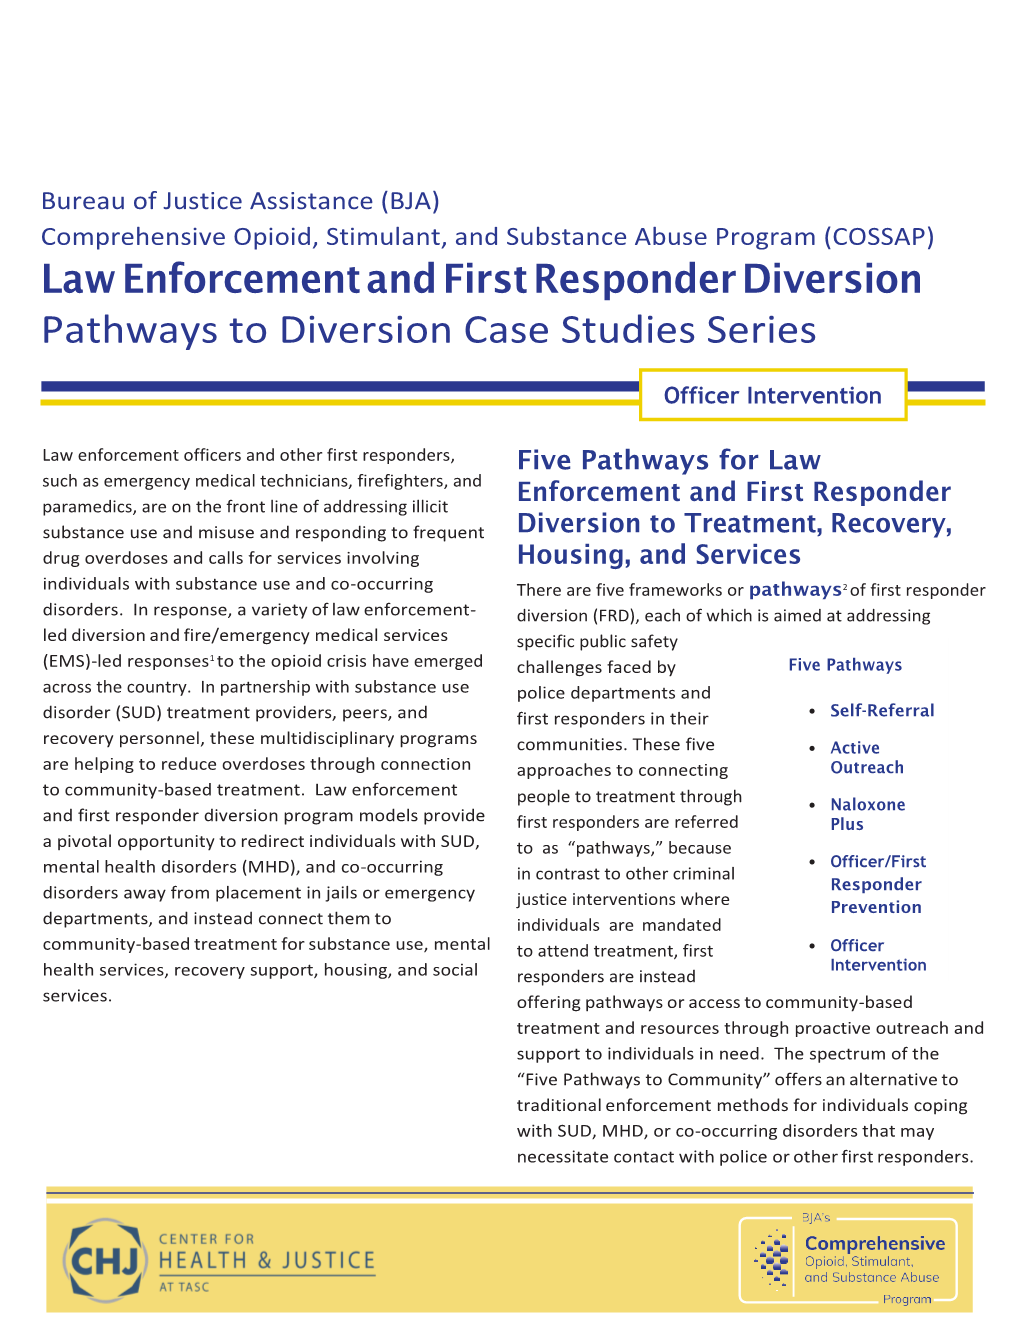 Pathways to Diversion Case Studies Series: Officer Intervention